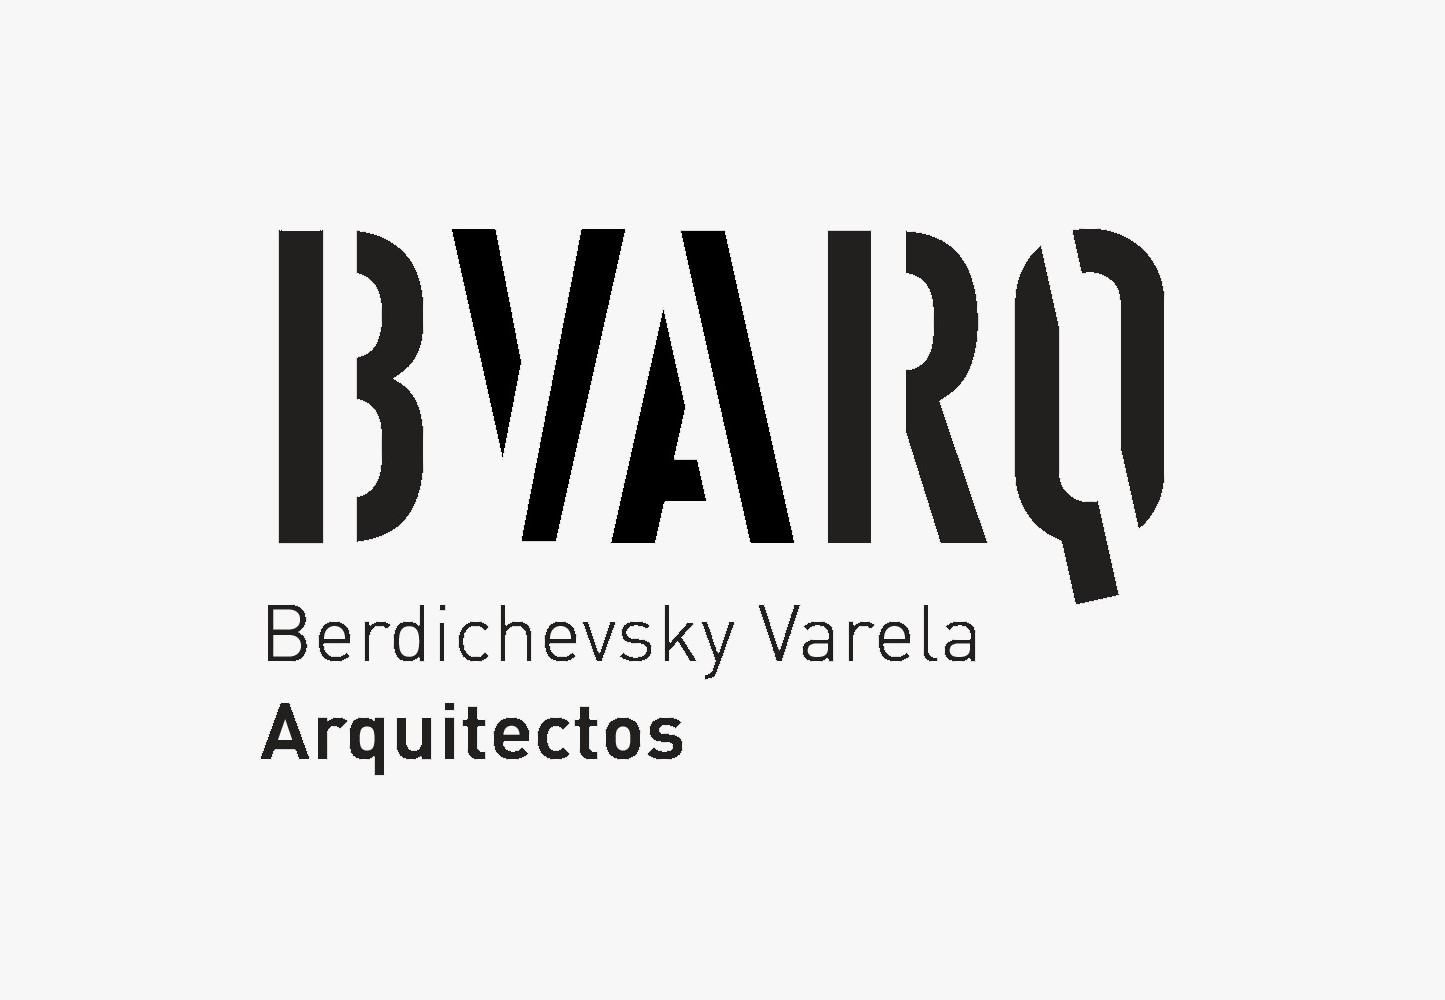 BVARQ - Berdichevsky Varela Arquitectos